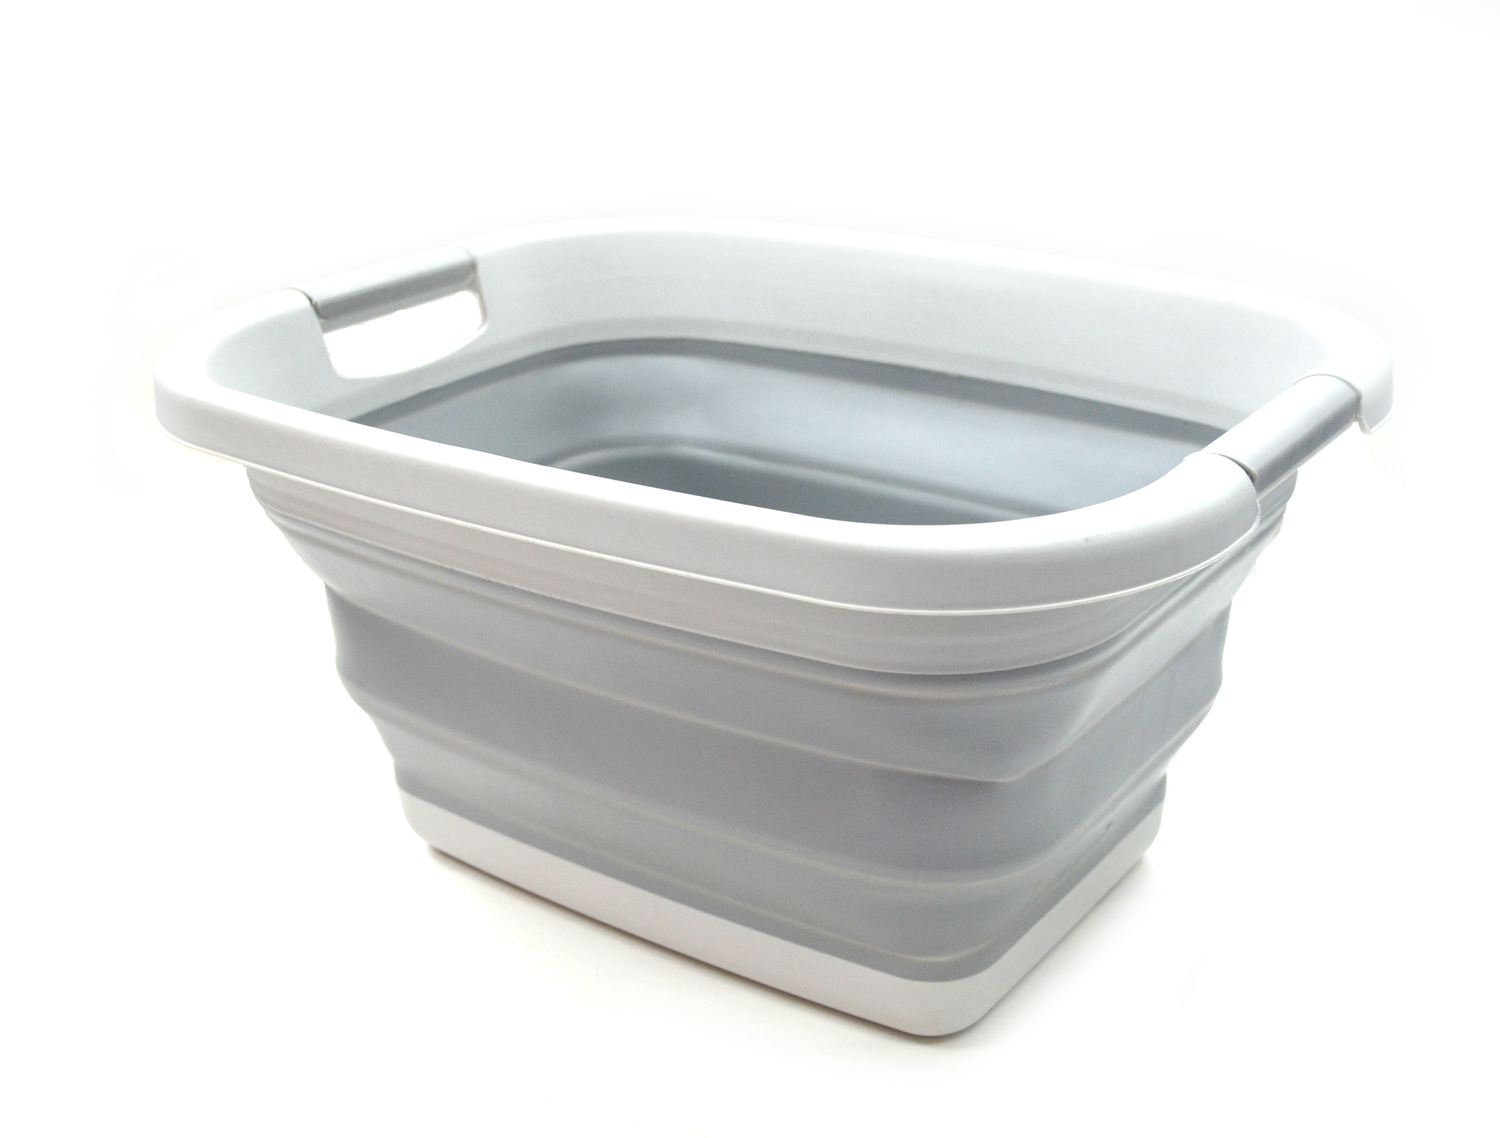 Space Saving Washing-up Bowl Foldable Hamper // Car Trunk Tub Portable Laundry Basket // Storage Container SAMMART Collapsible Super Big Round Bucket Black